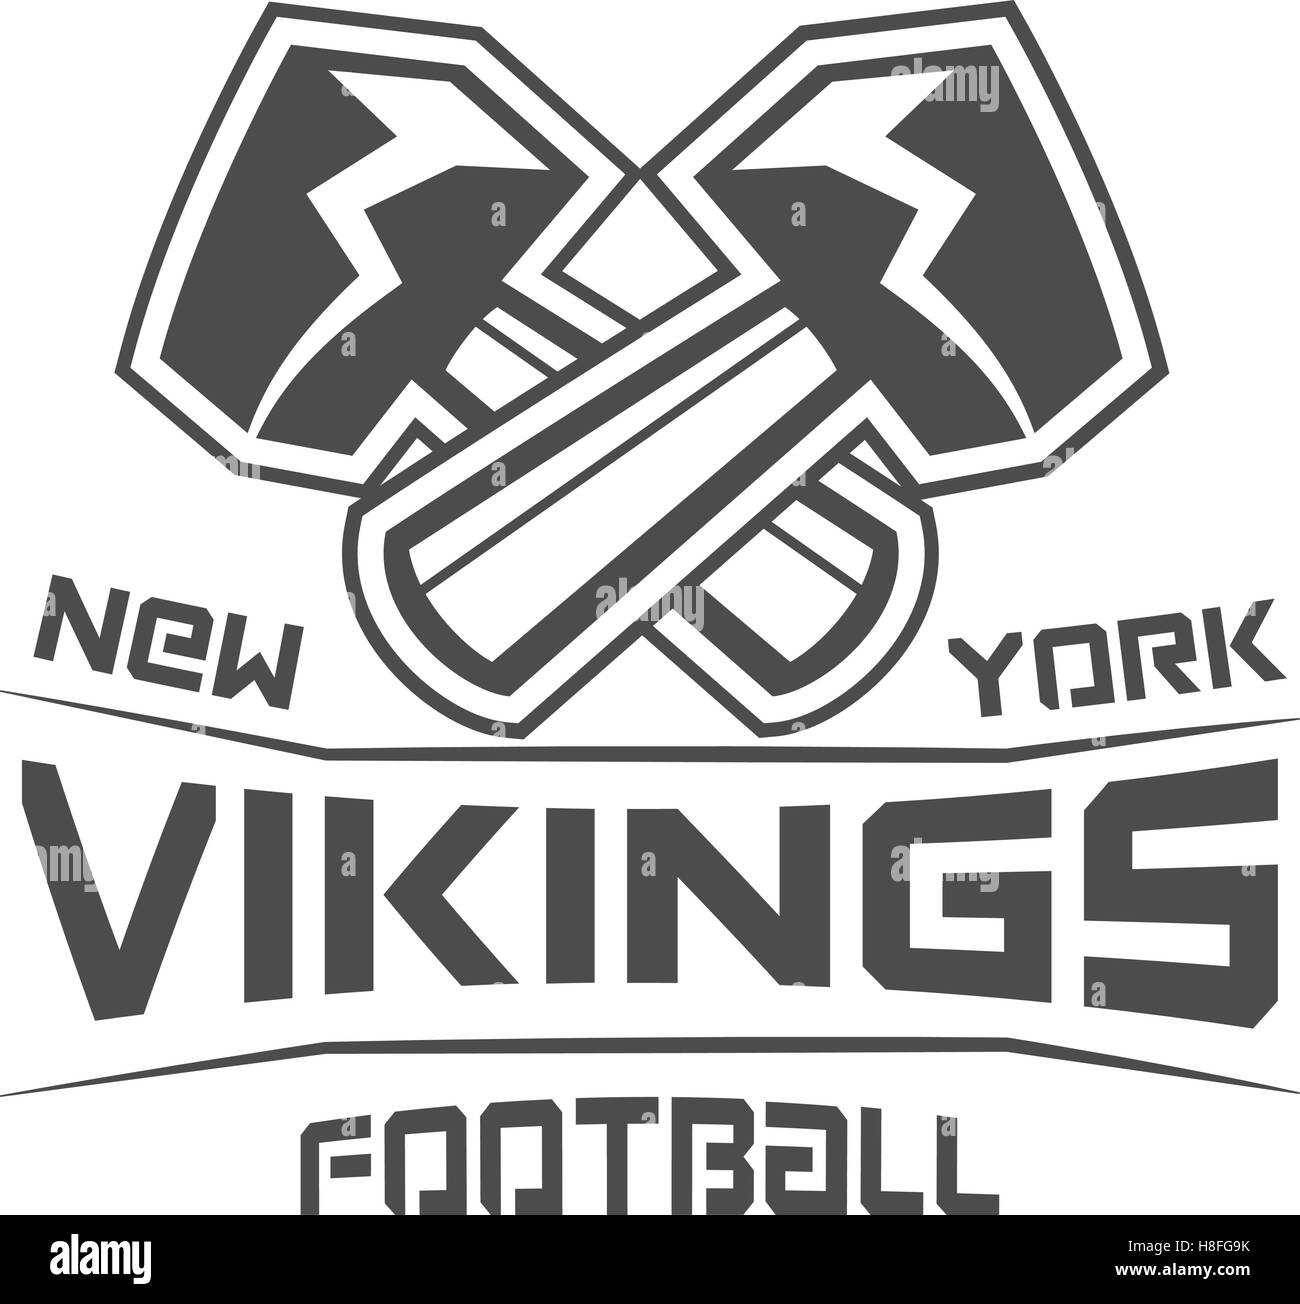 American football championship logo sport design Vector Image